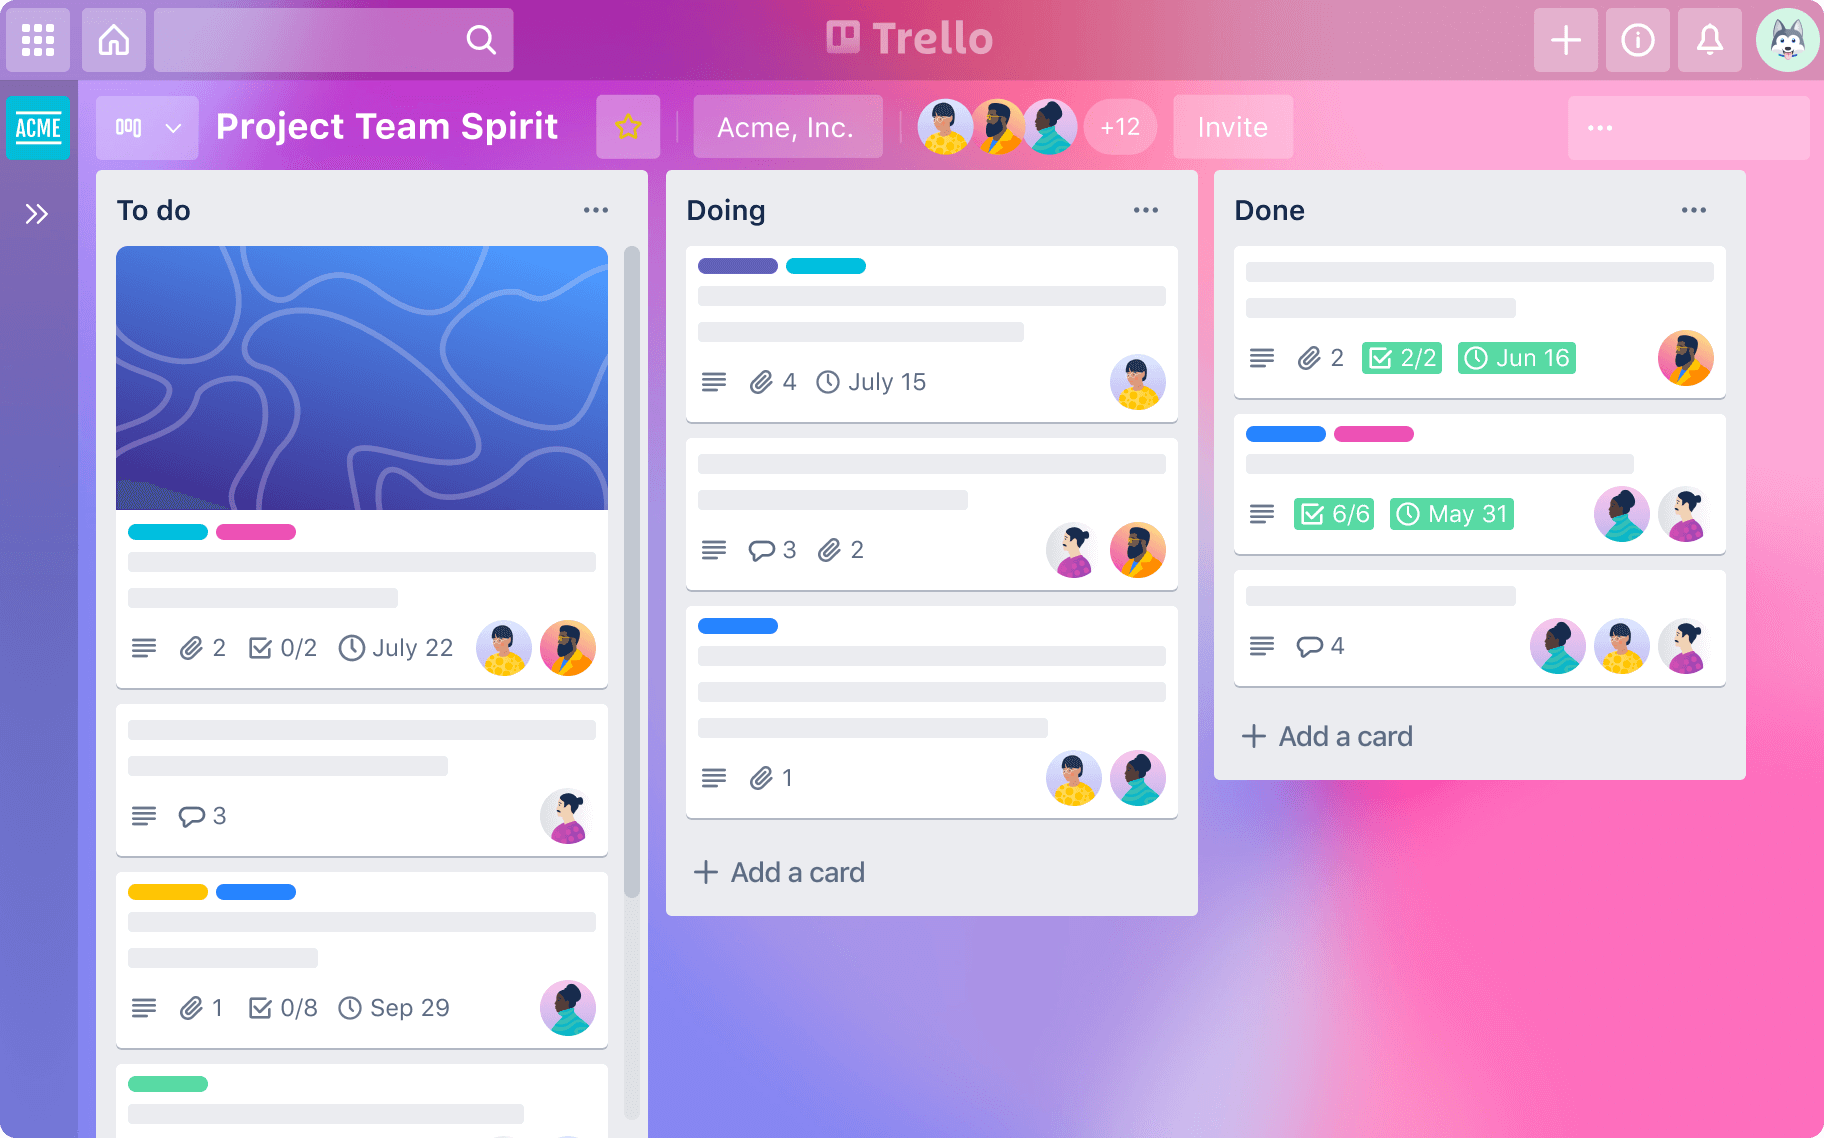 colorful user interface of Trello